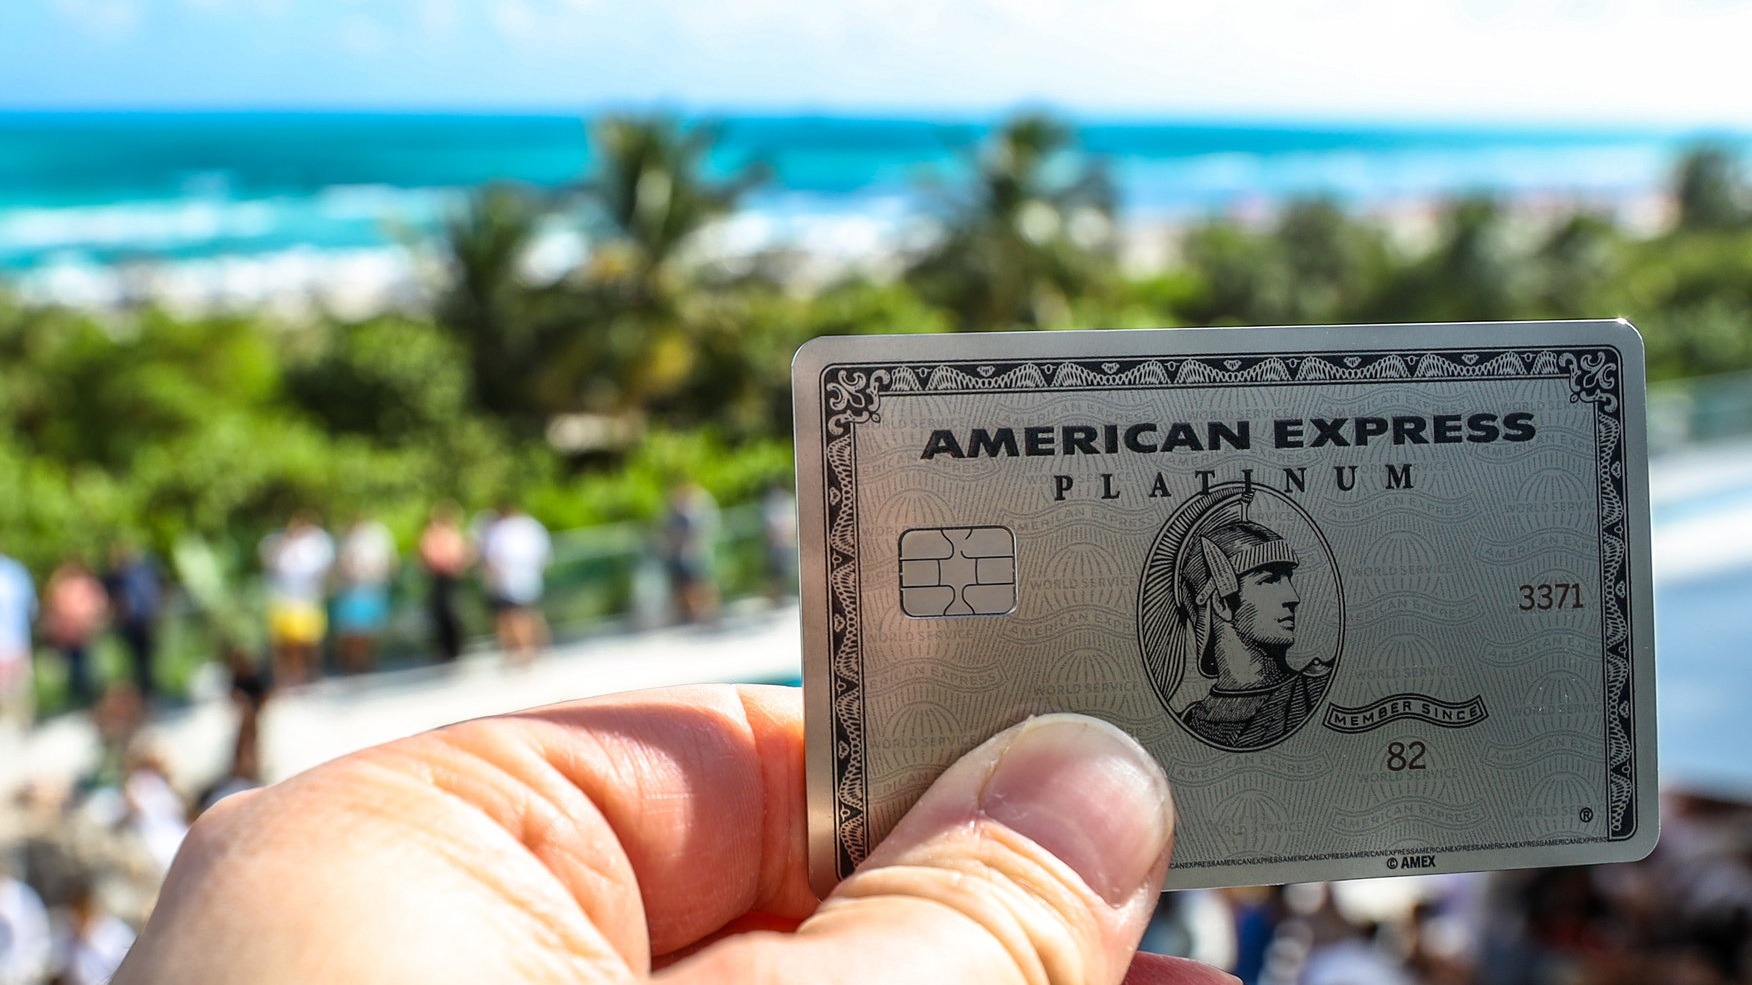 The American Express Platinum card